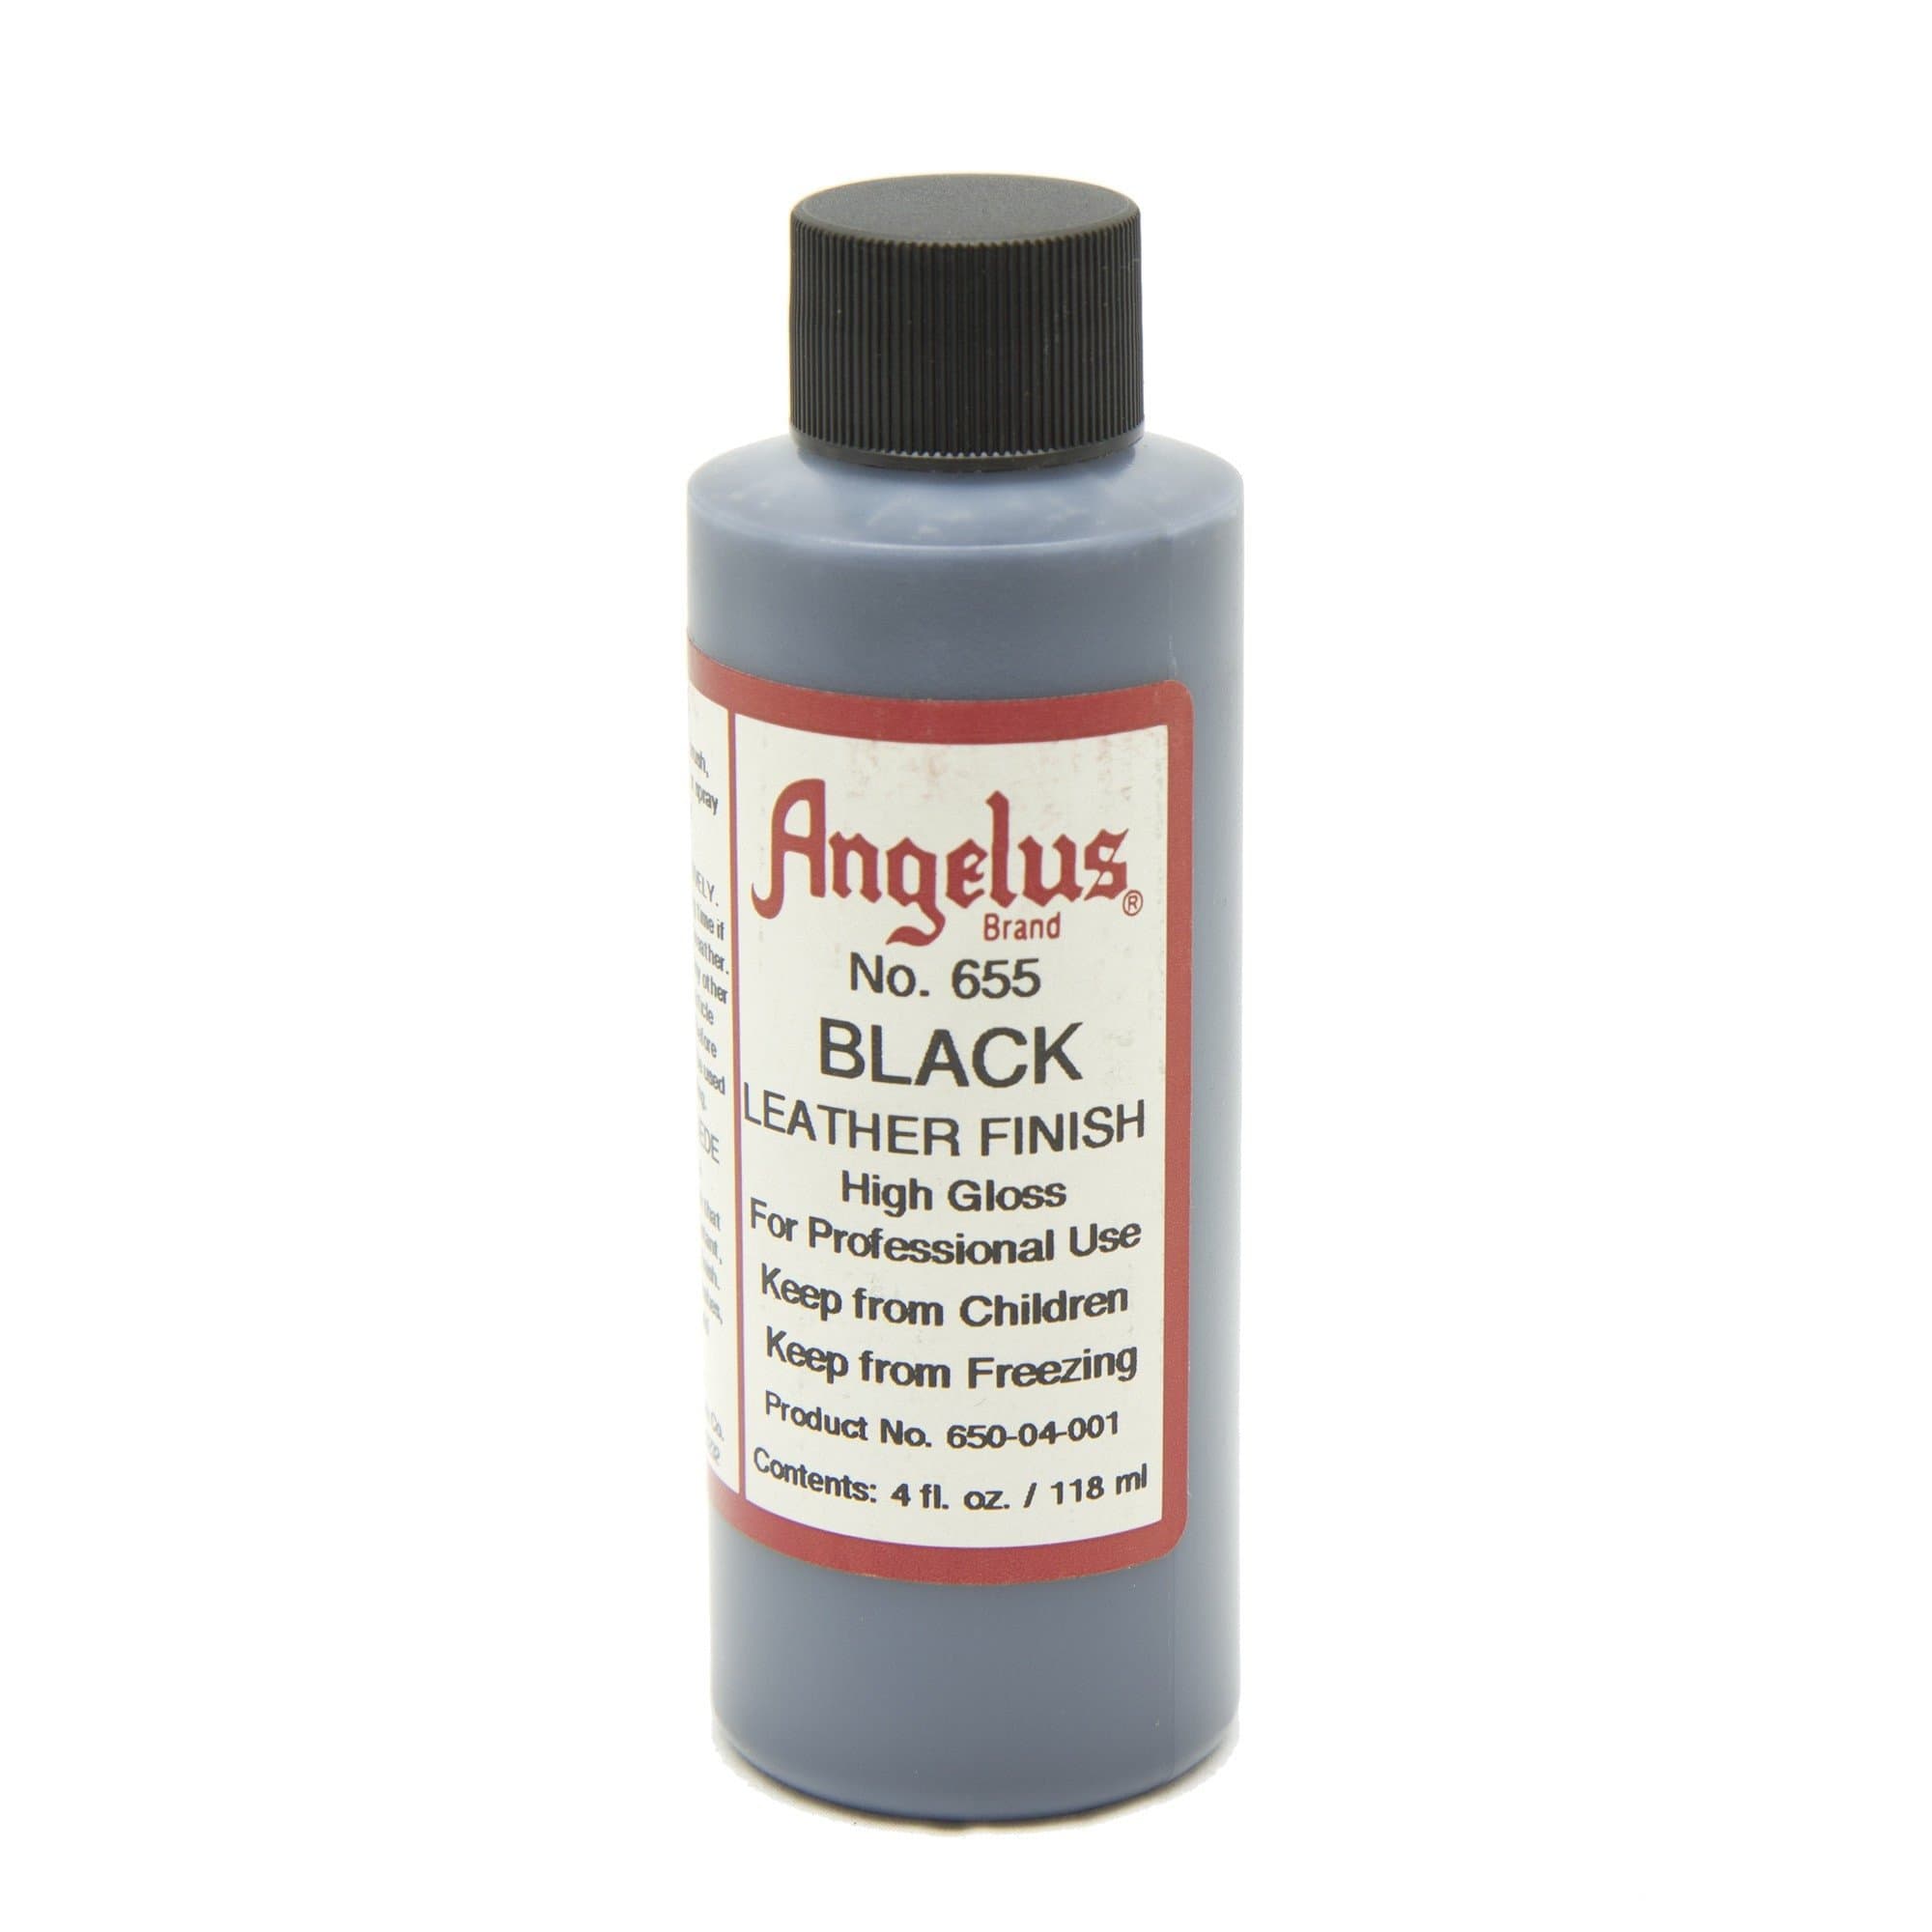 Angelus Leather Finish High Gloss | Buy 